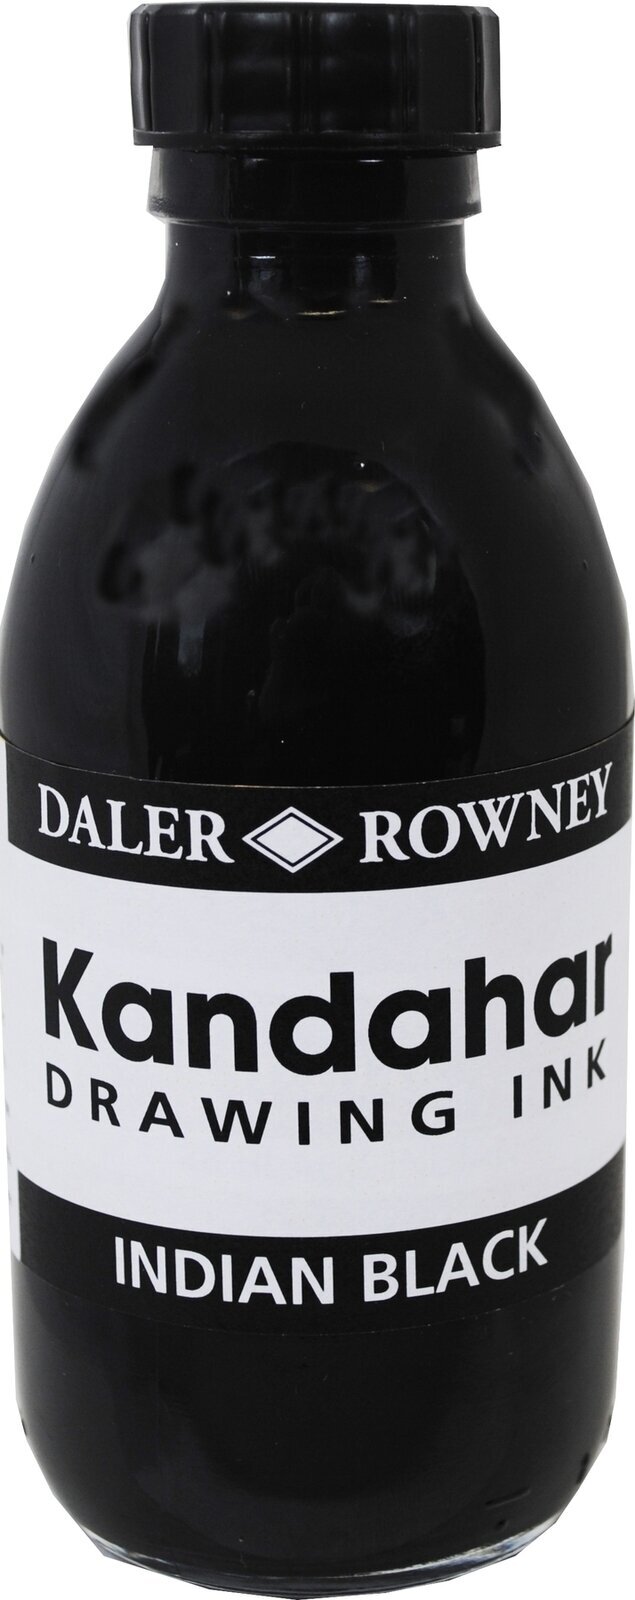 Atrament Daler Rowney Kandahar Kreslící tuš Black 175 ml 1 ks